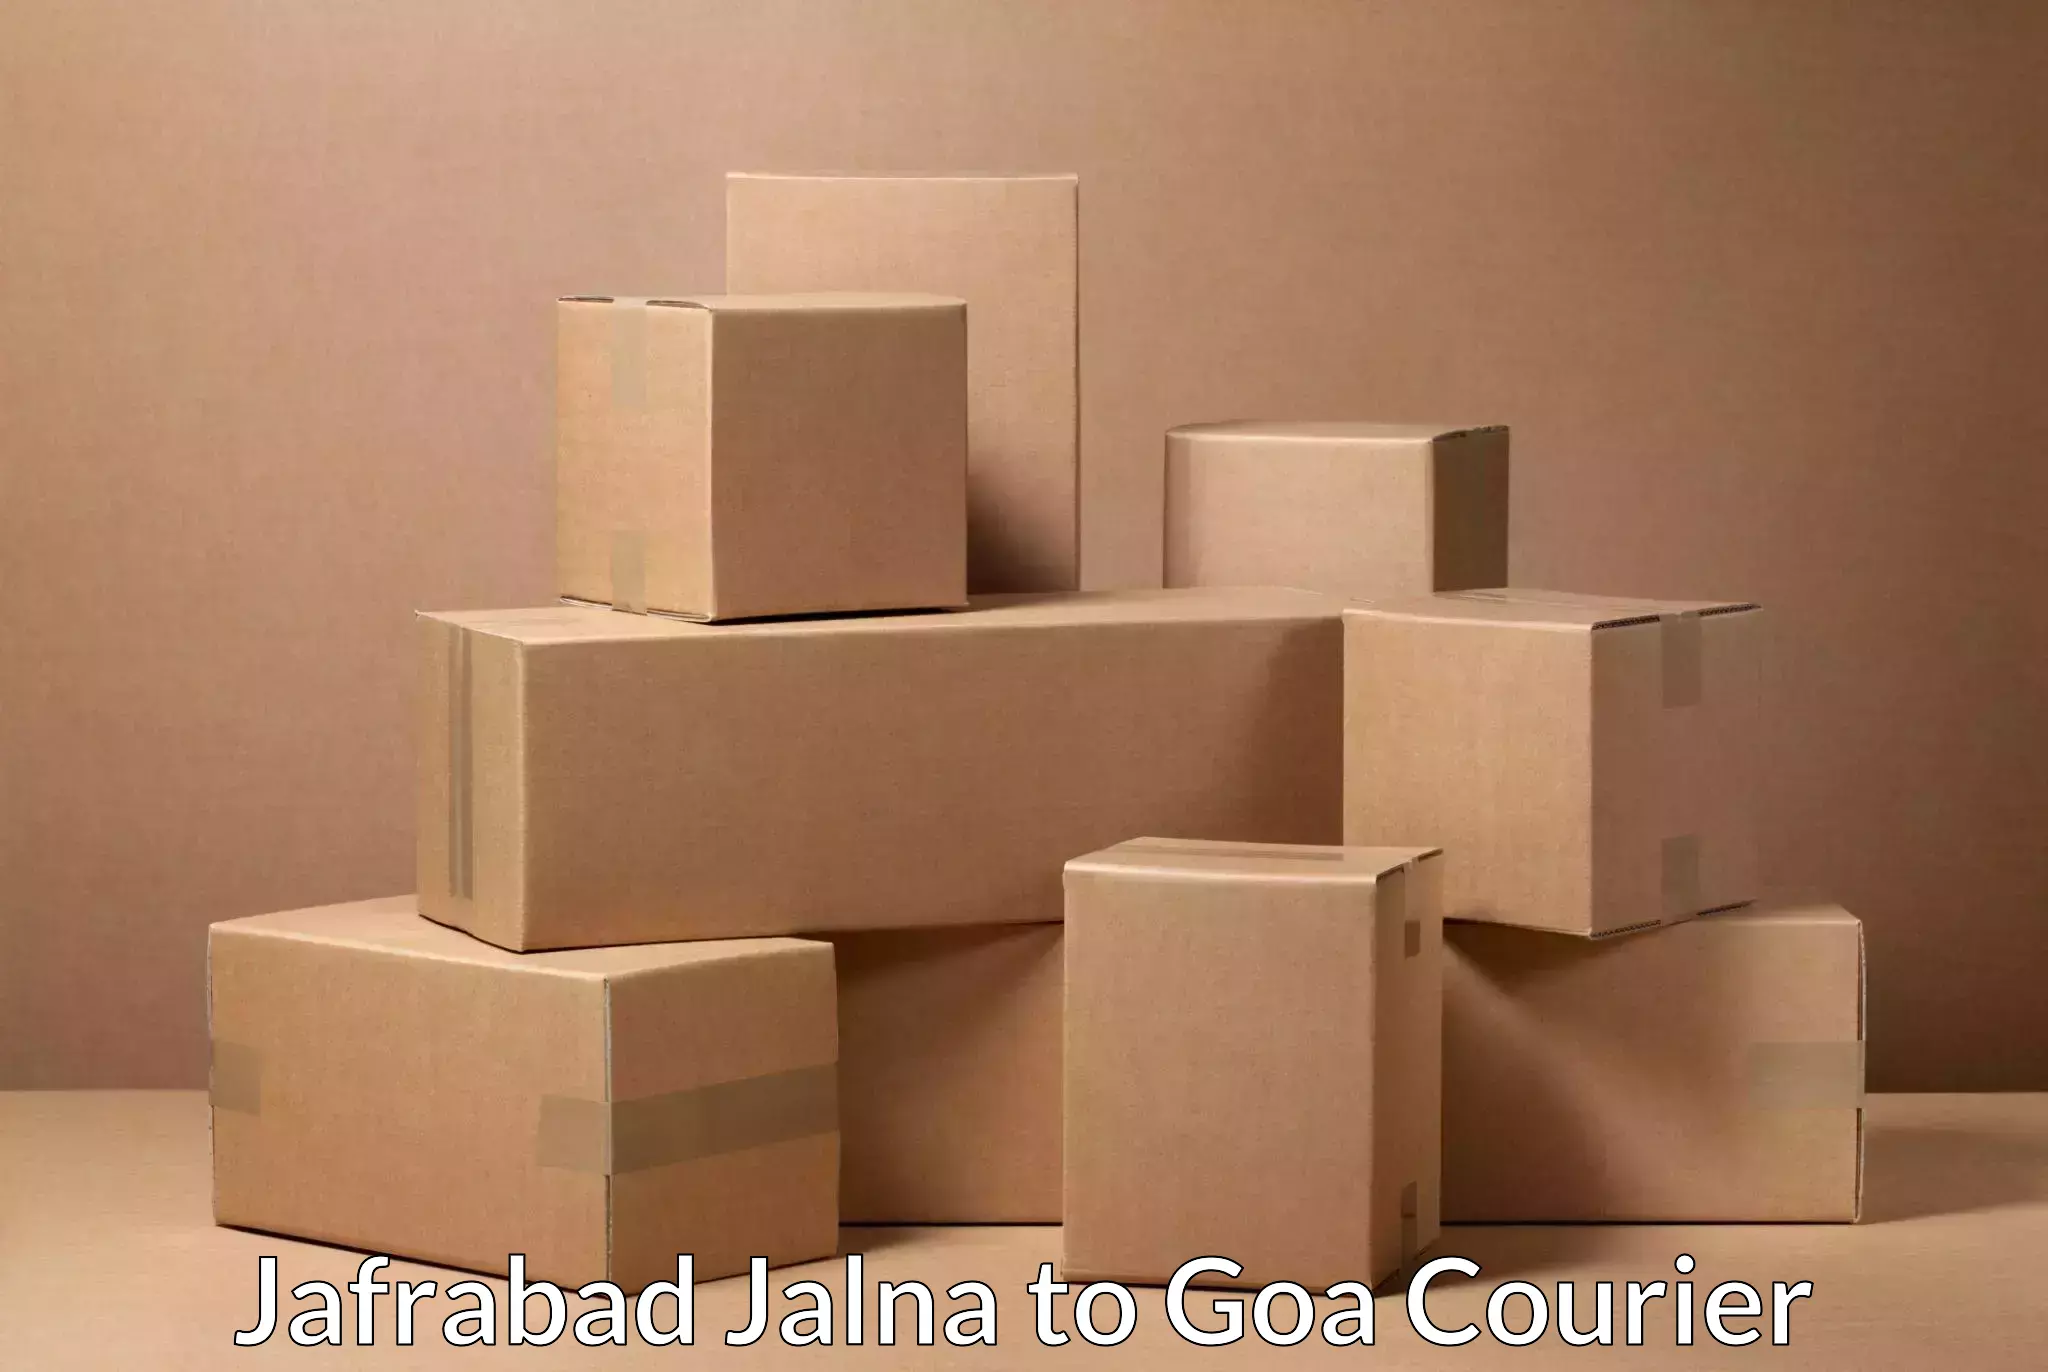 Scheduled delivery in Jafrabad Jalna to Vasco da Gama